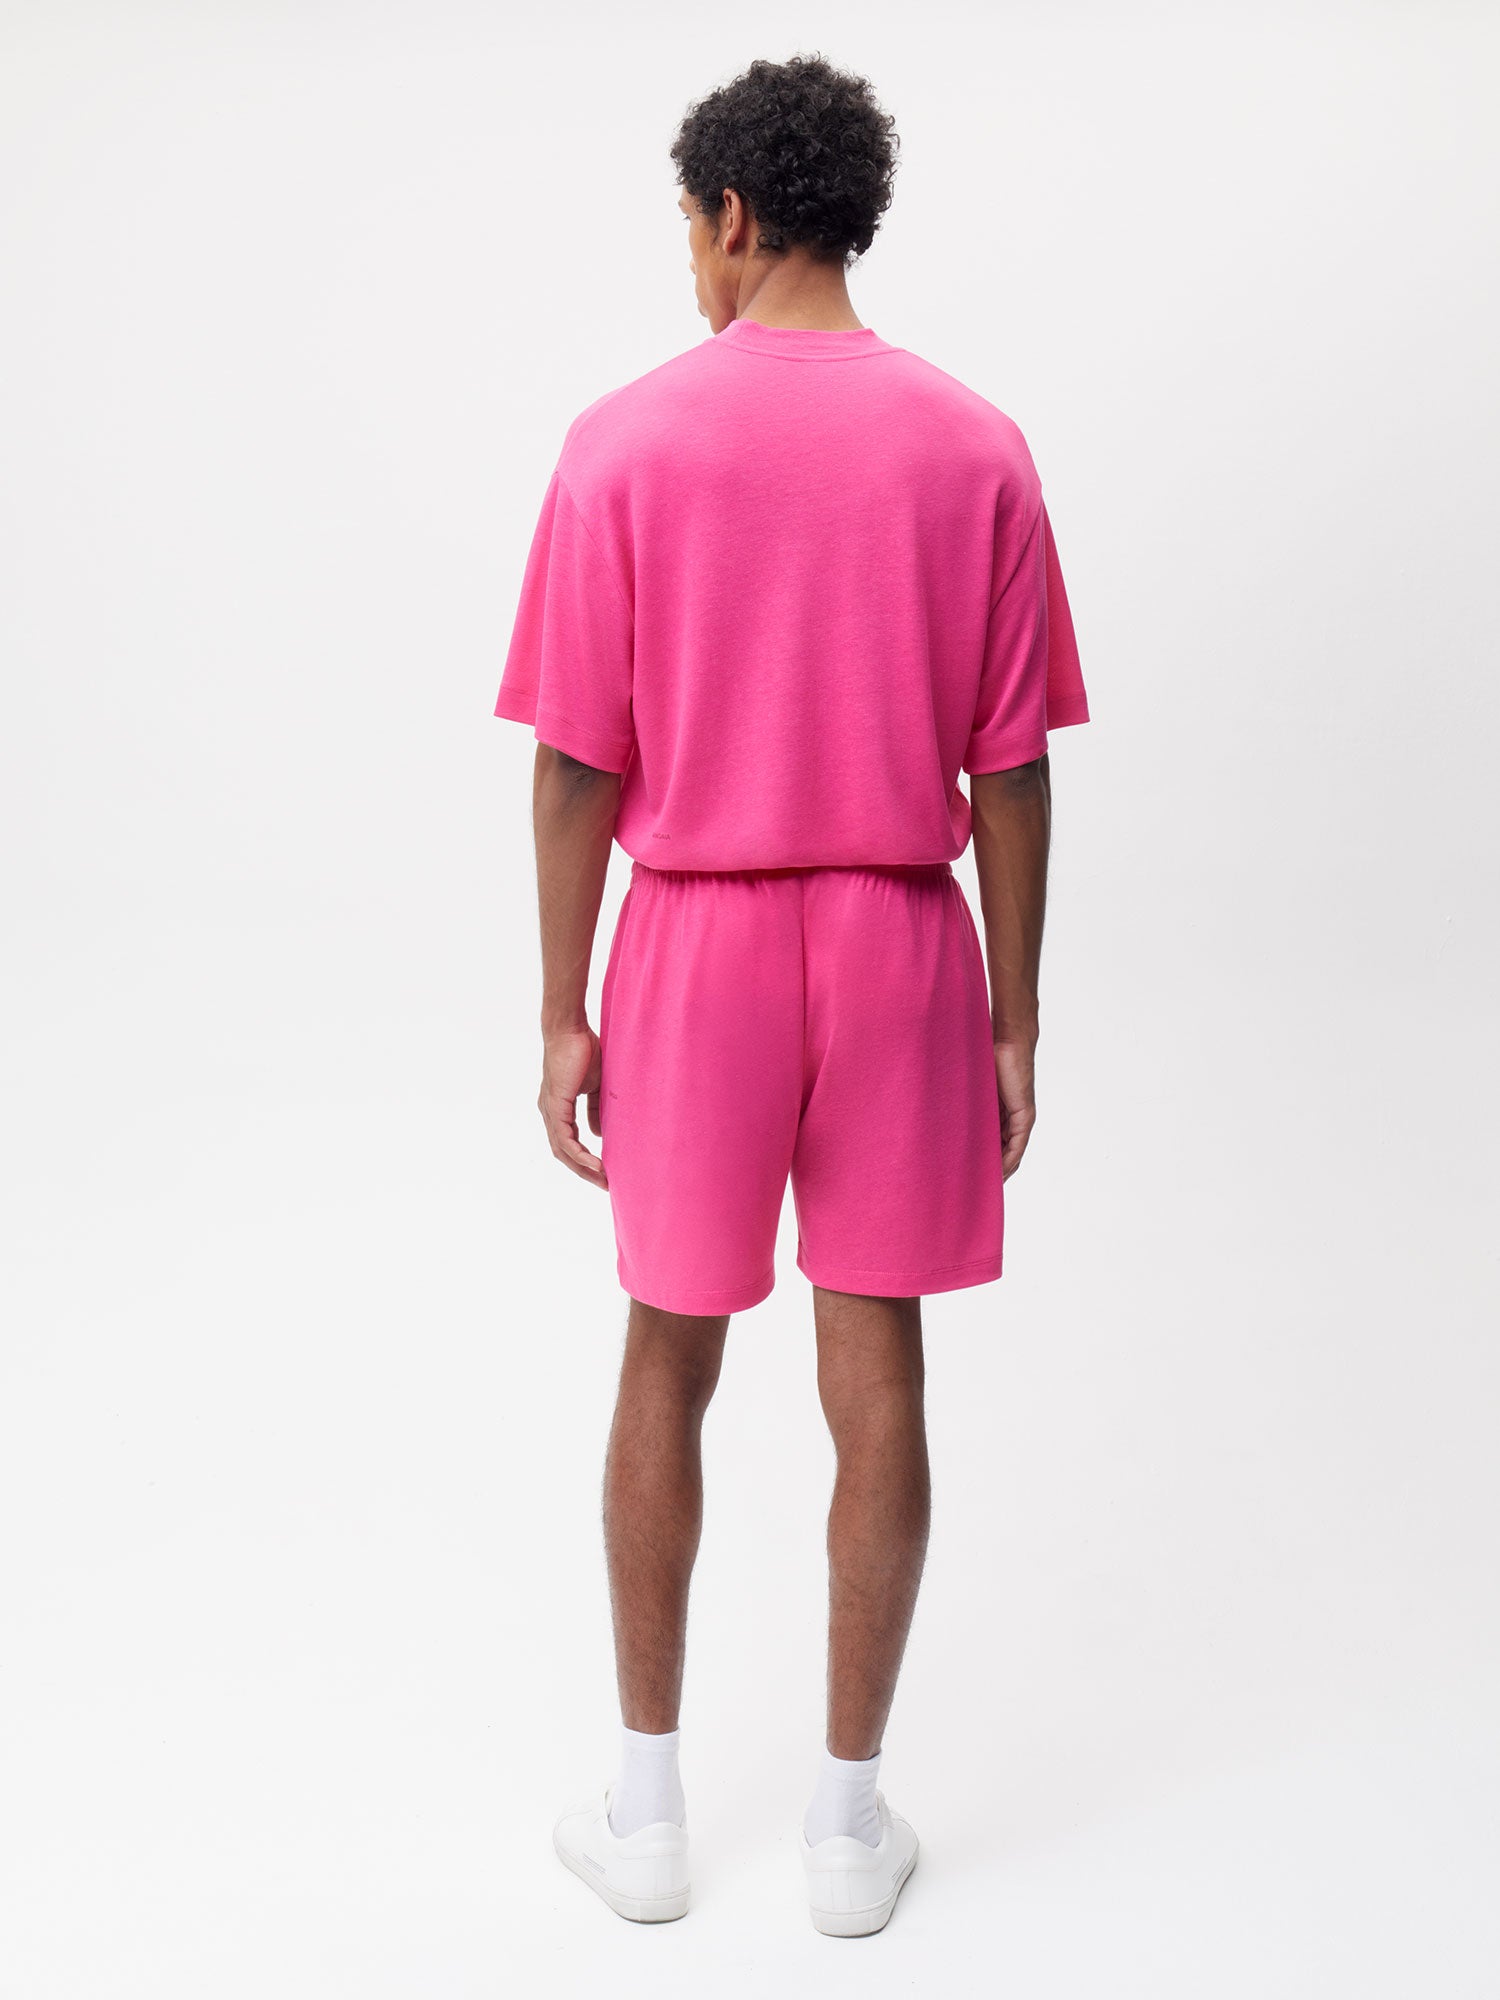 FRUTFIBER-Shorts-Tourmaline-Pink-Male-2